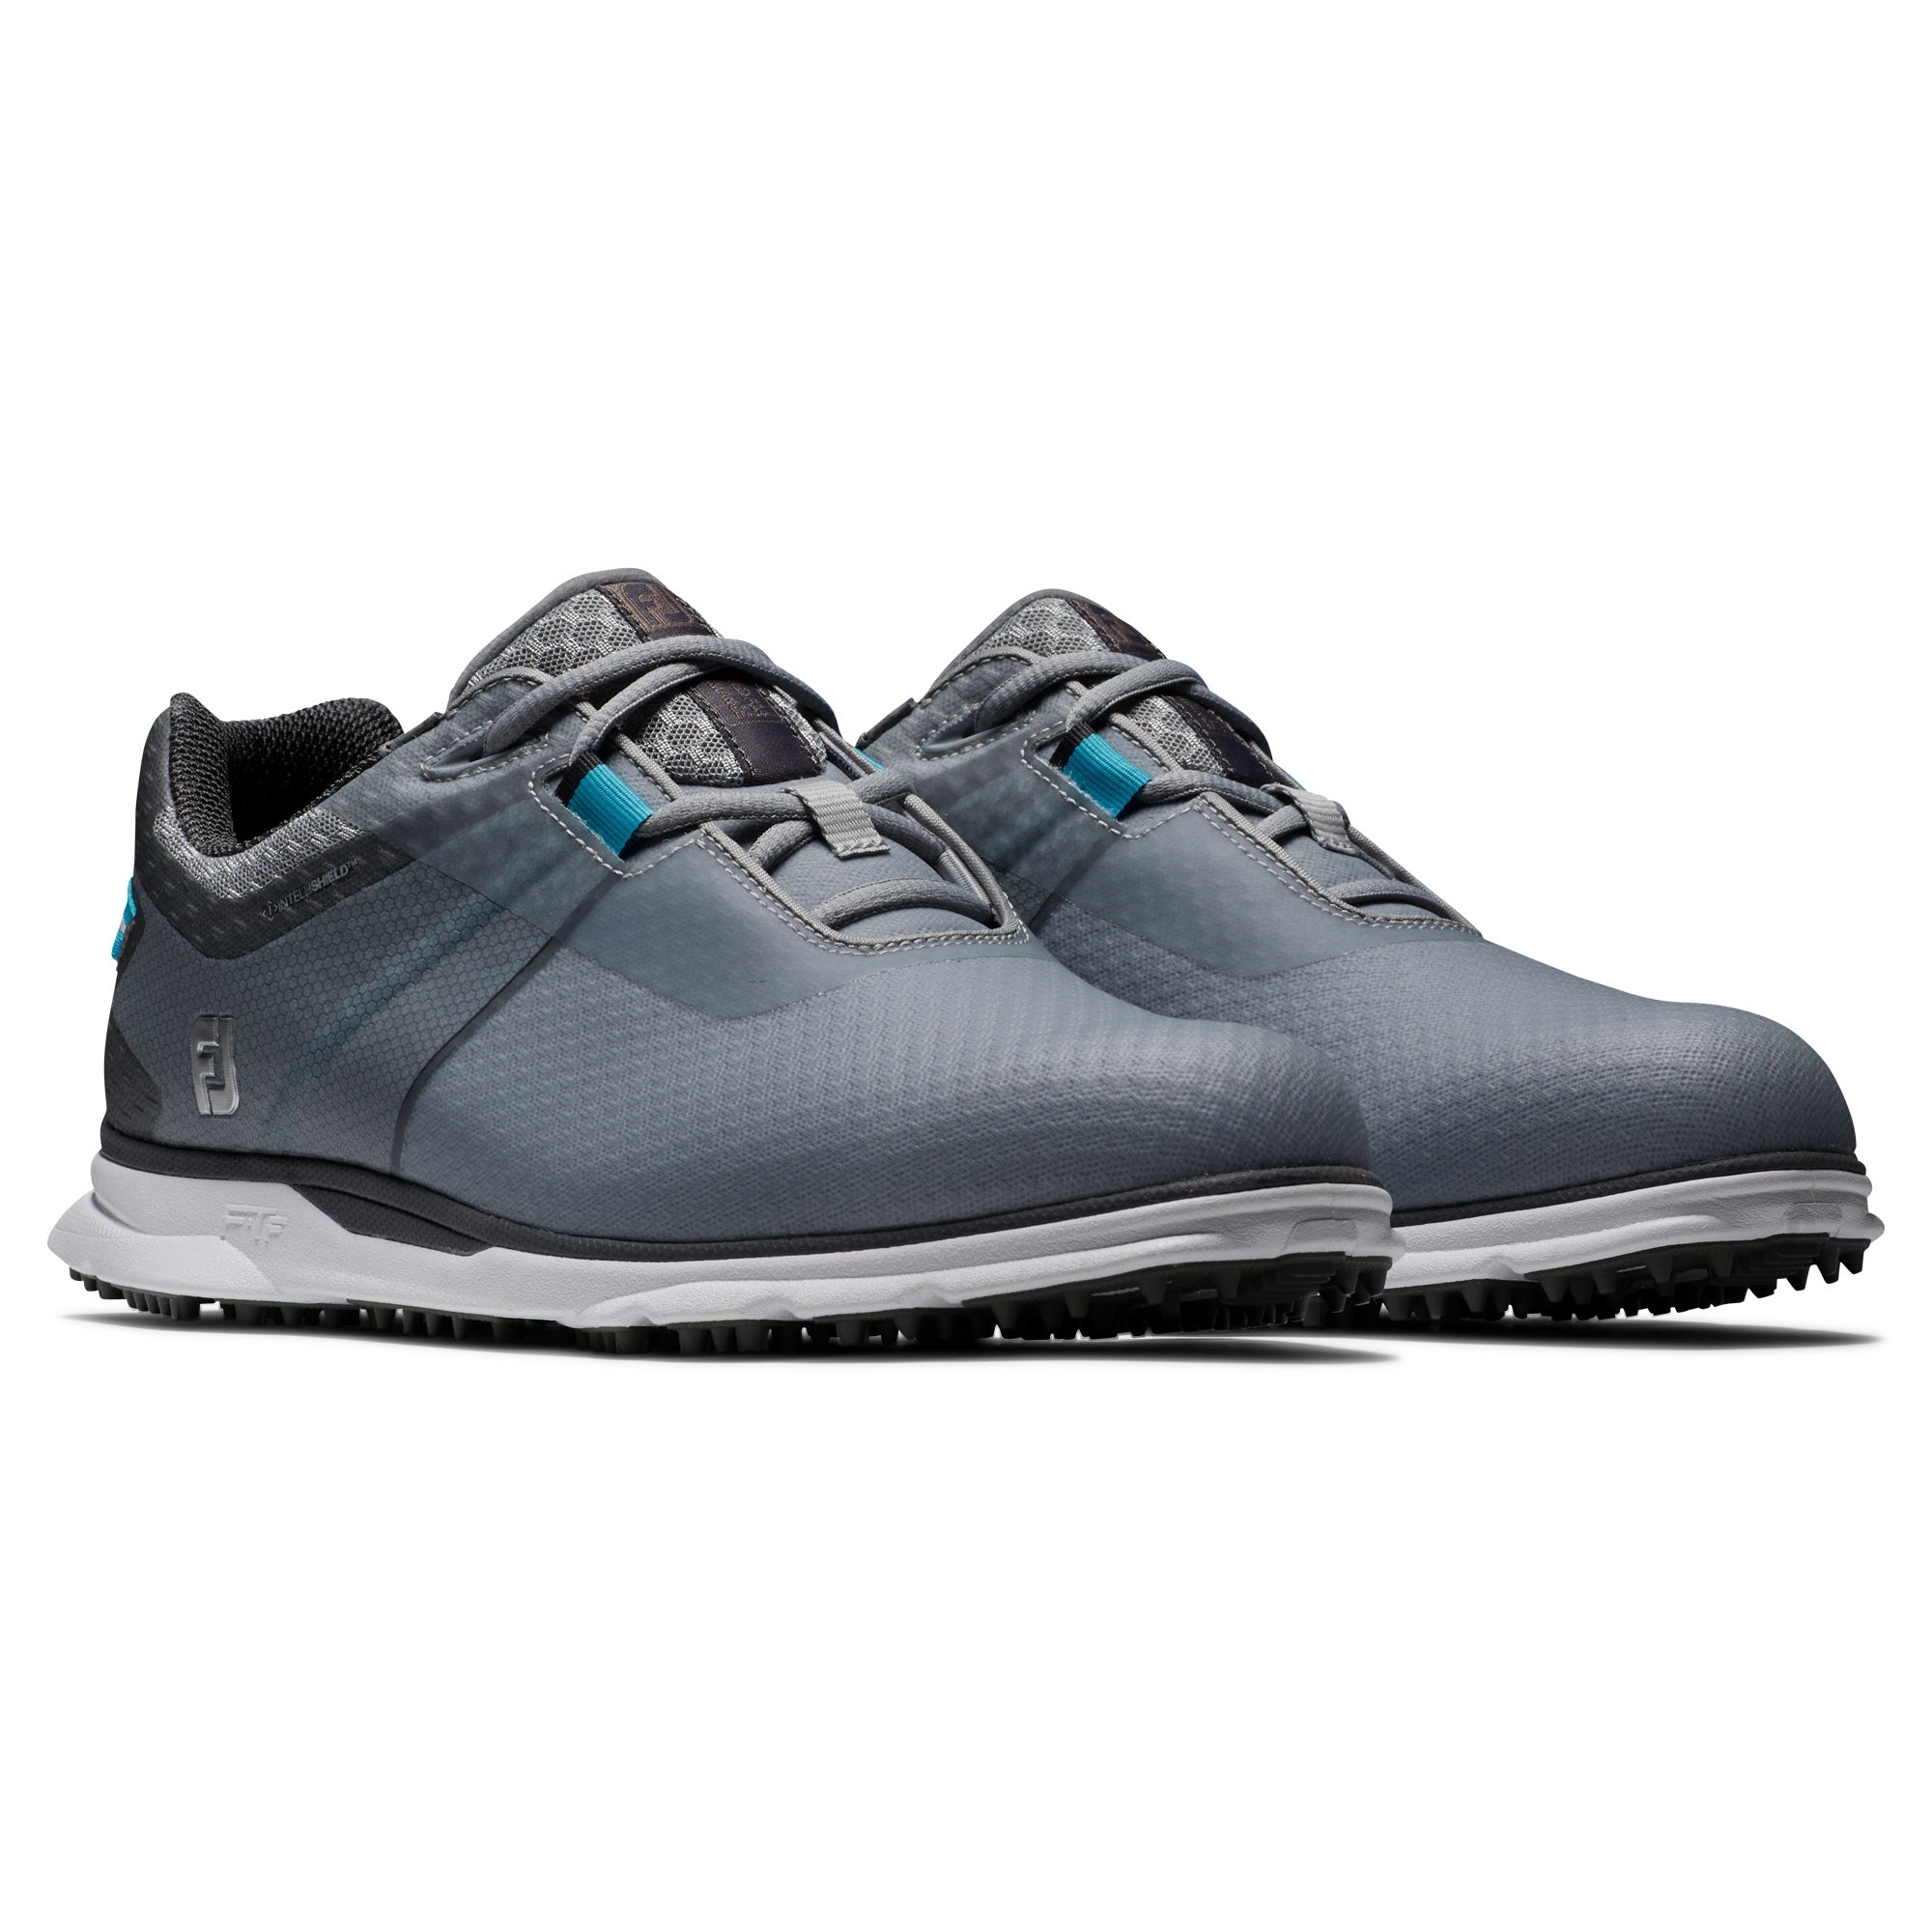 FootJoy Pro|SL Sport Golf Shoes 53855 Grey/Reef Blue (Previous Season Style)